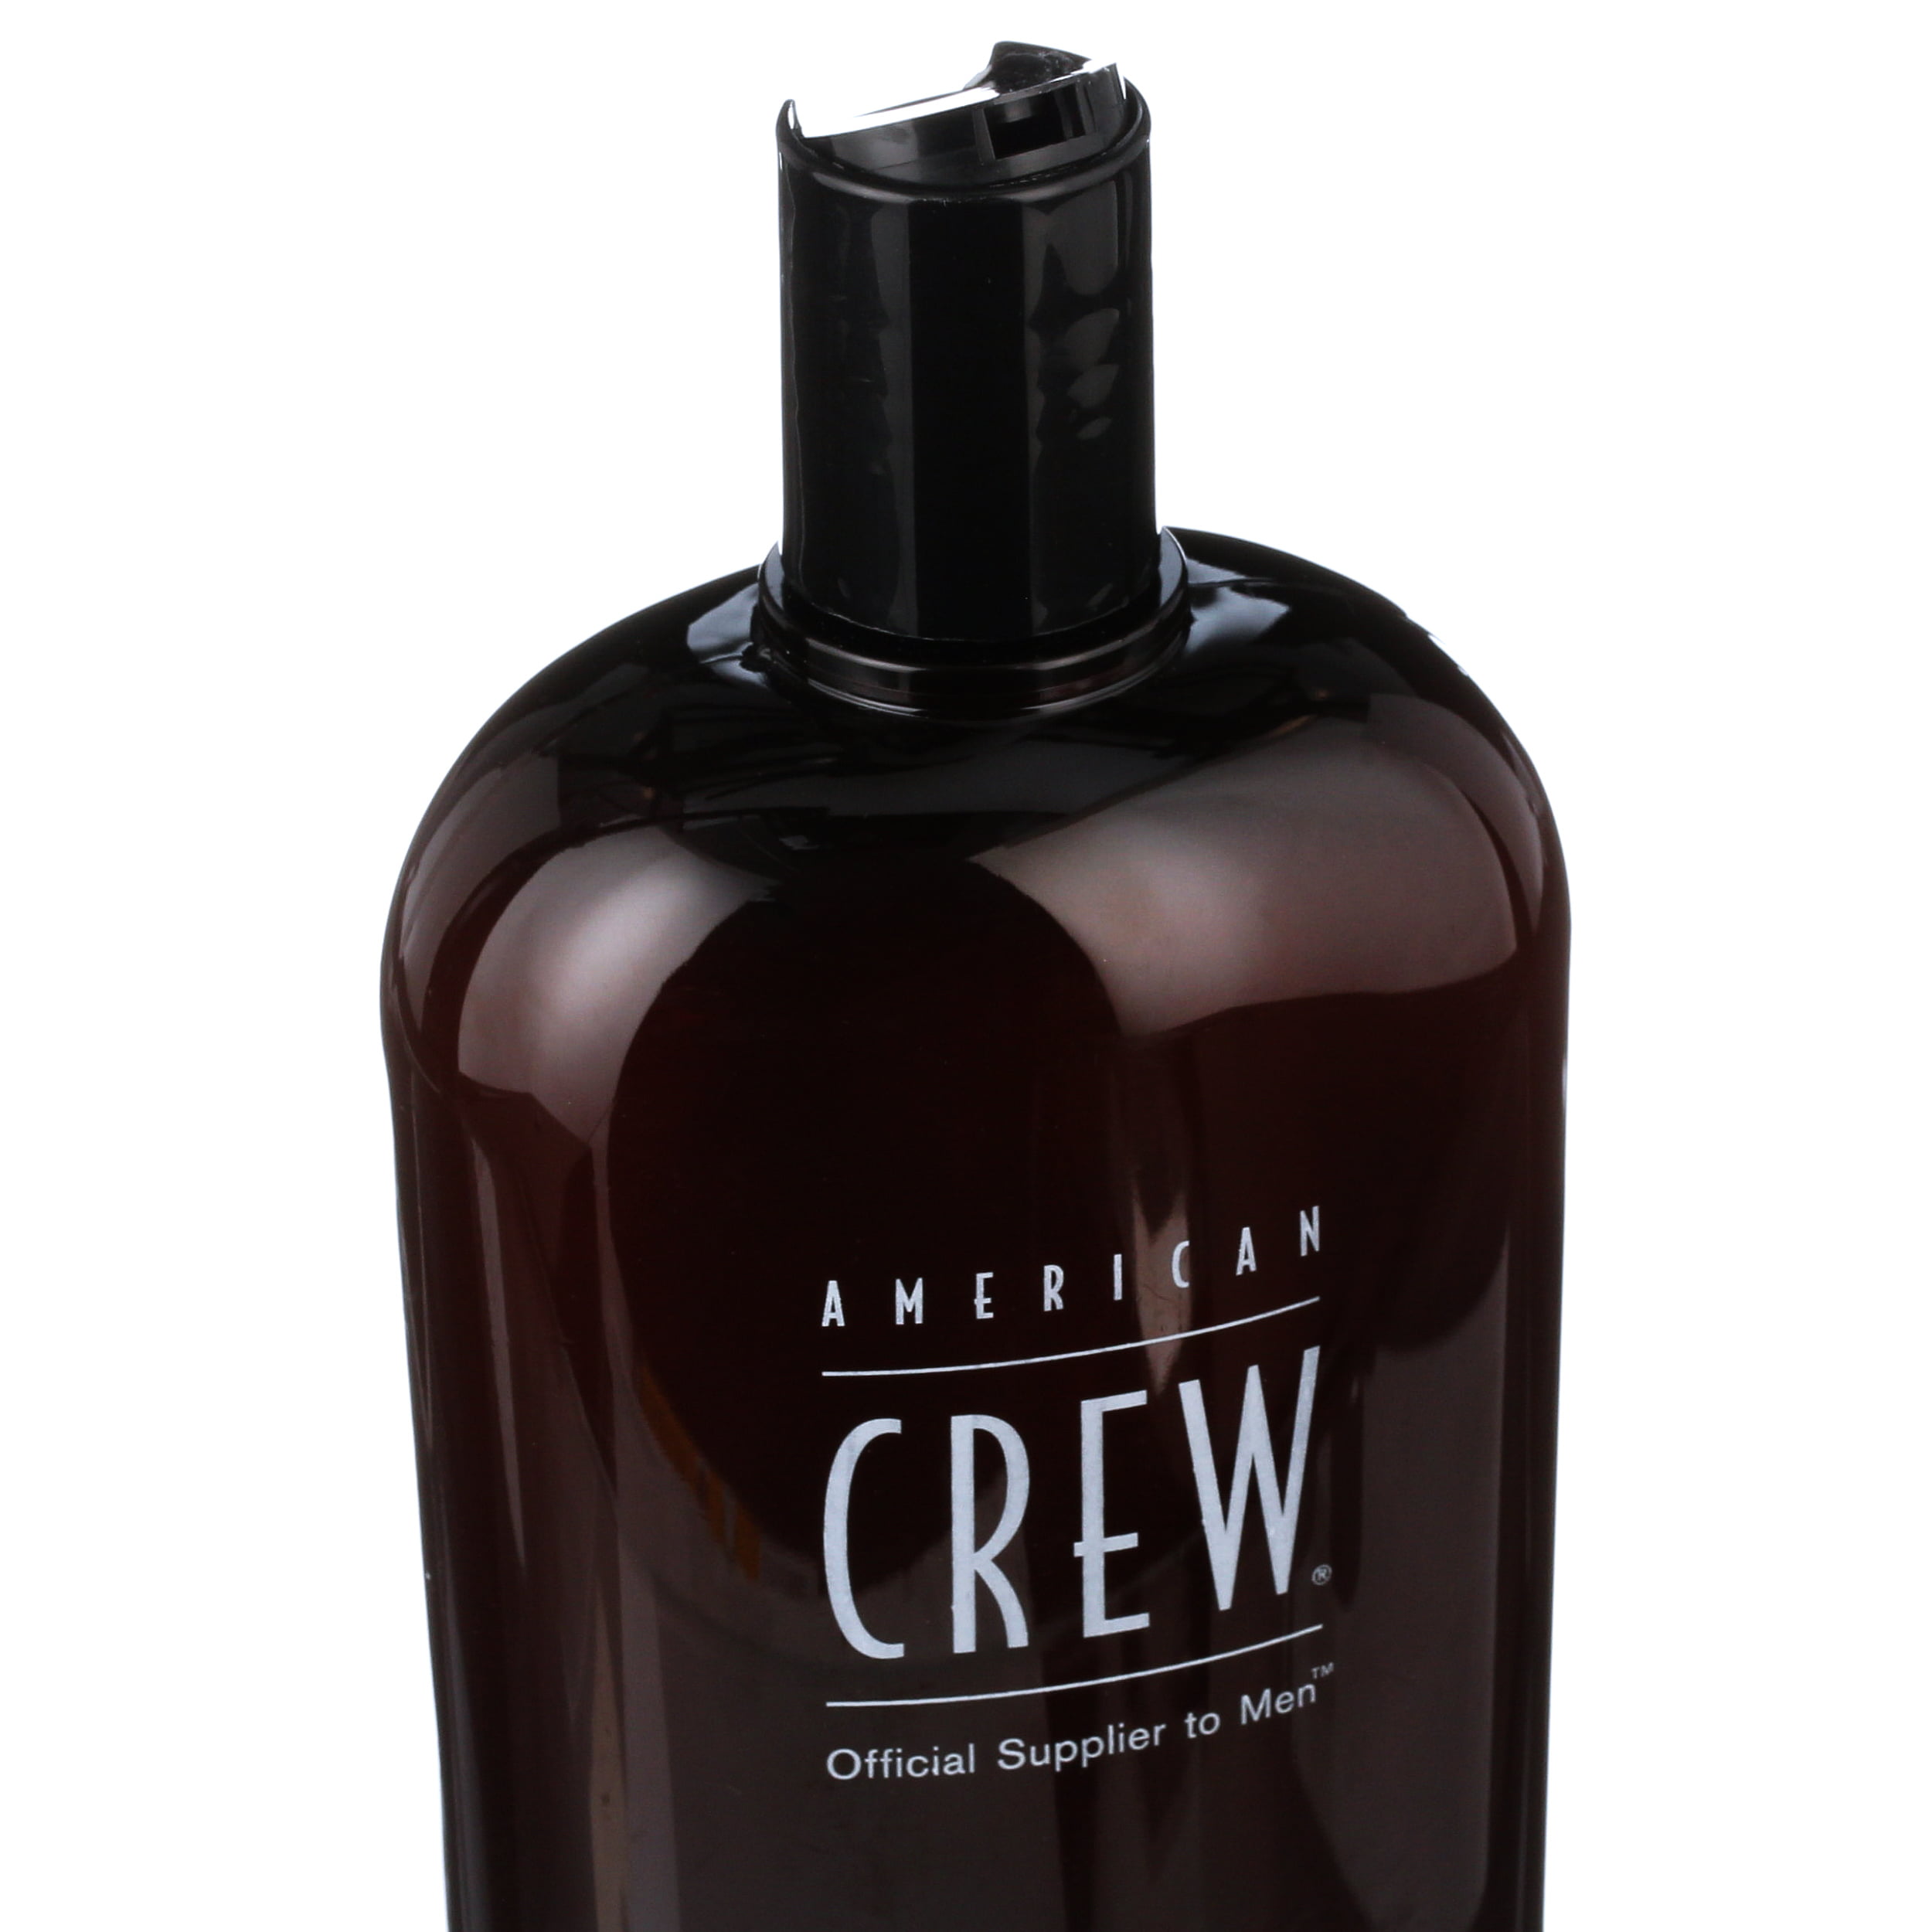 oz Body Conditioner Shampoo Wash and Crew American 3-in-1 33.8